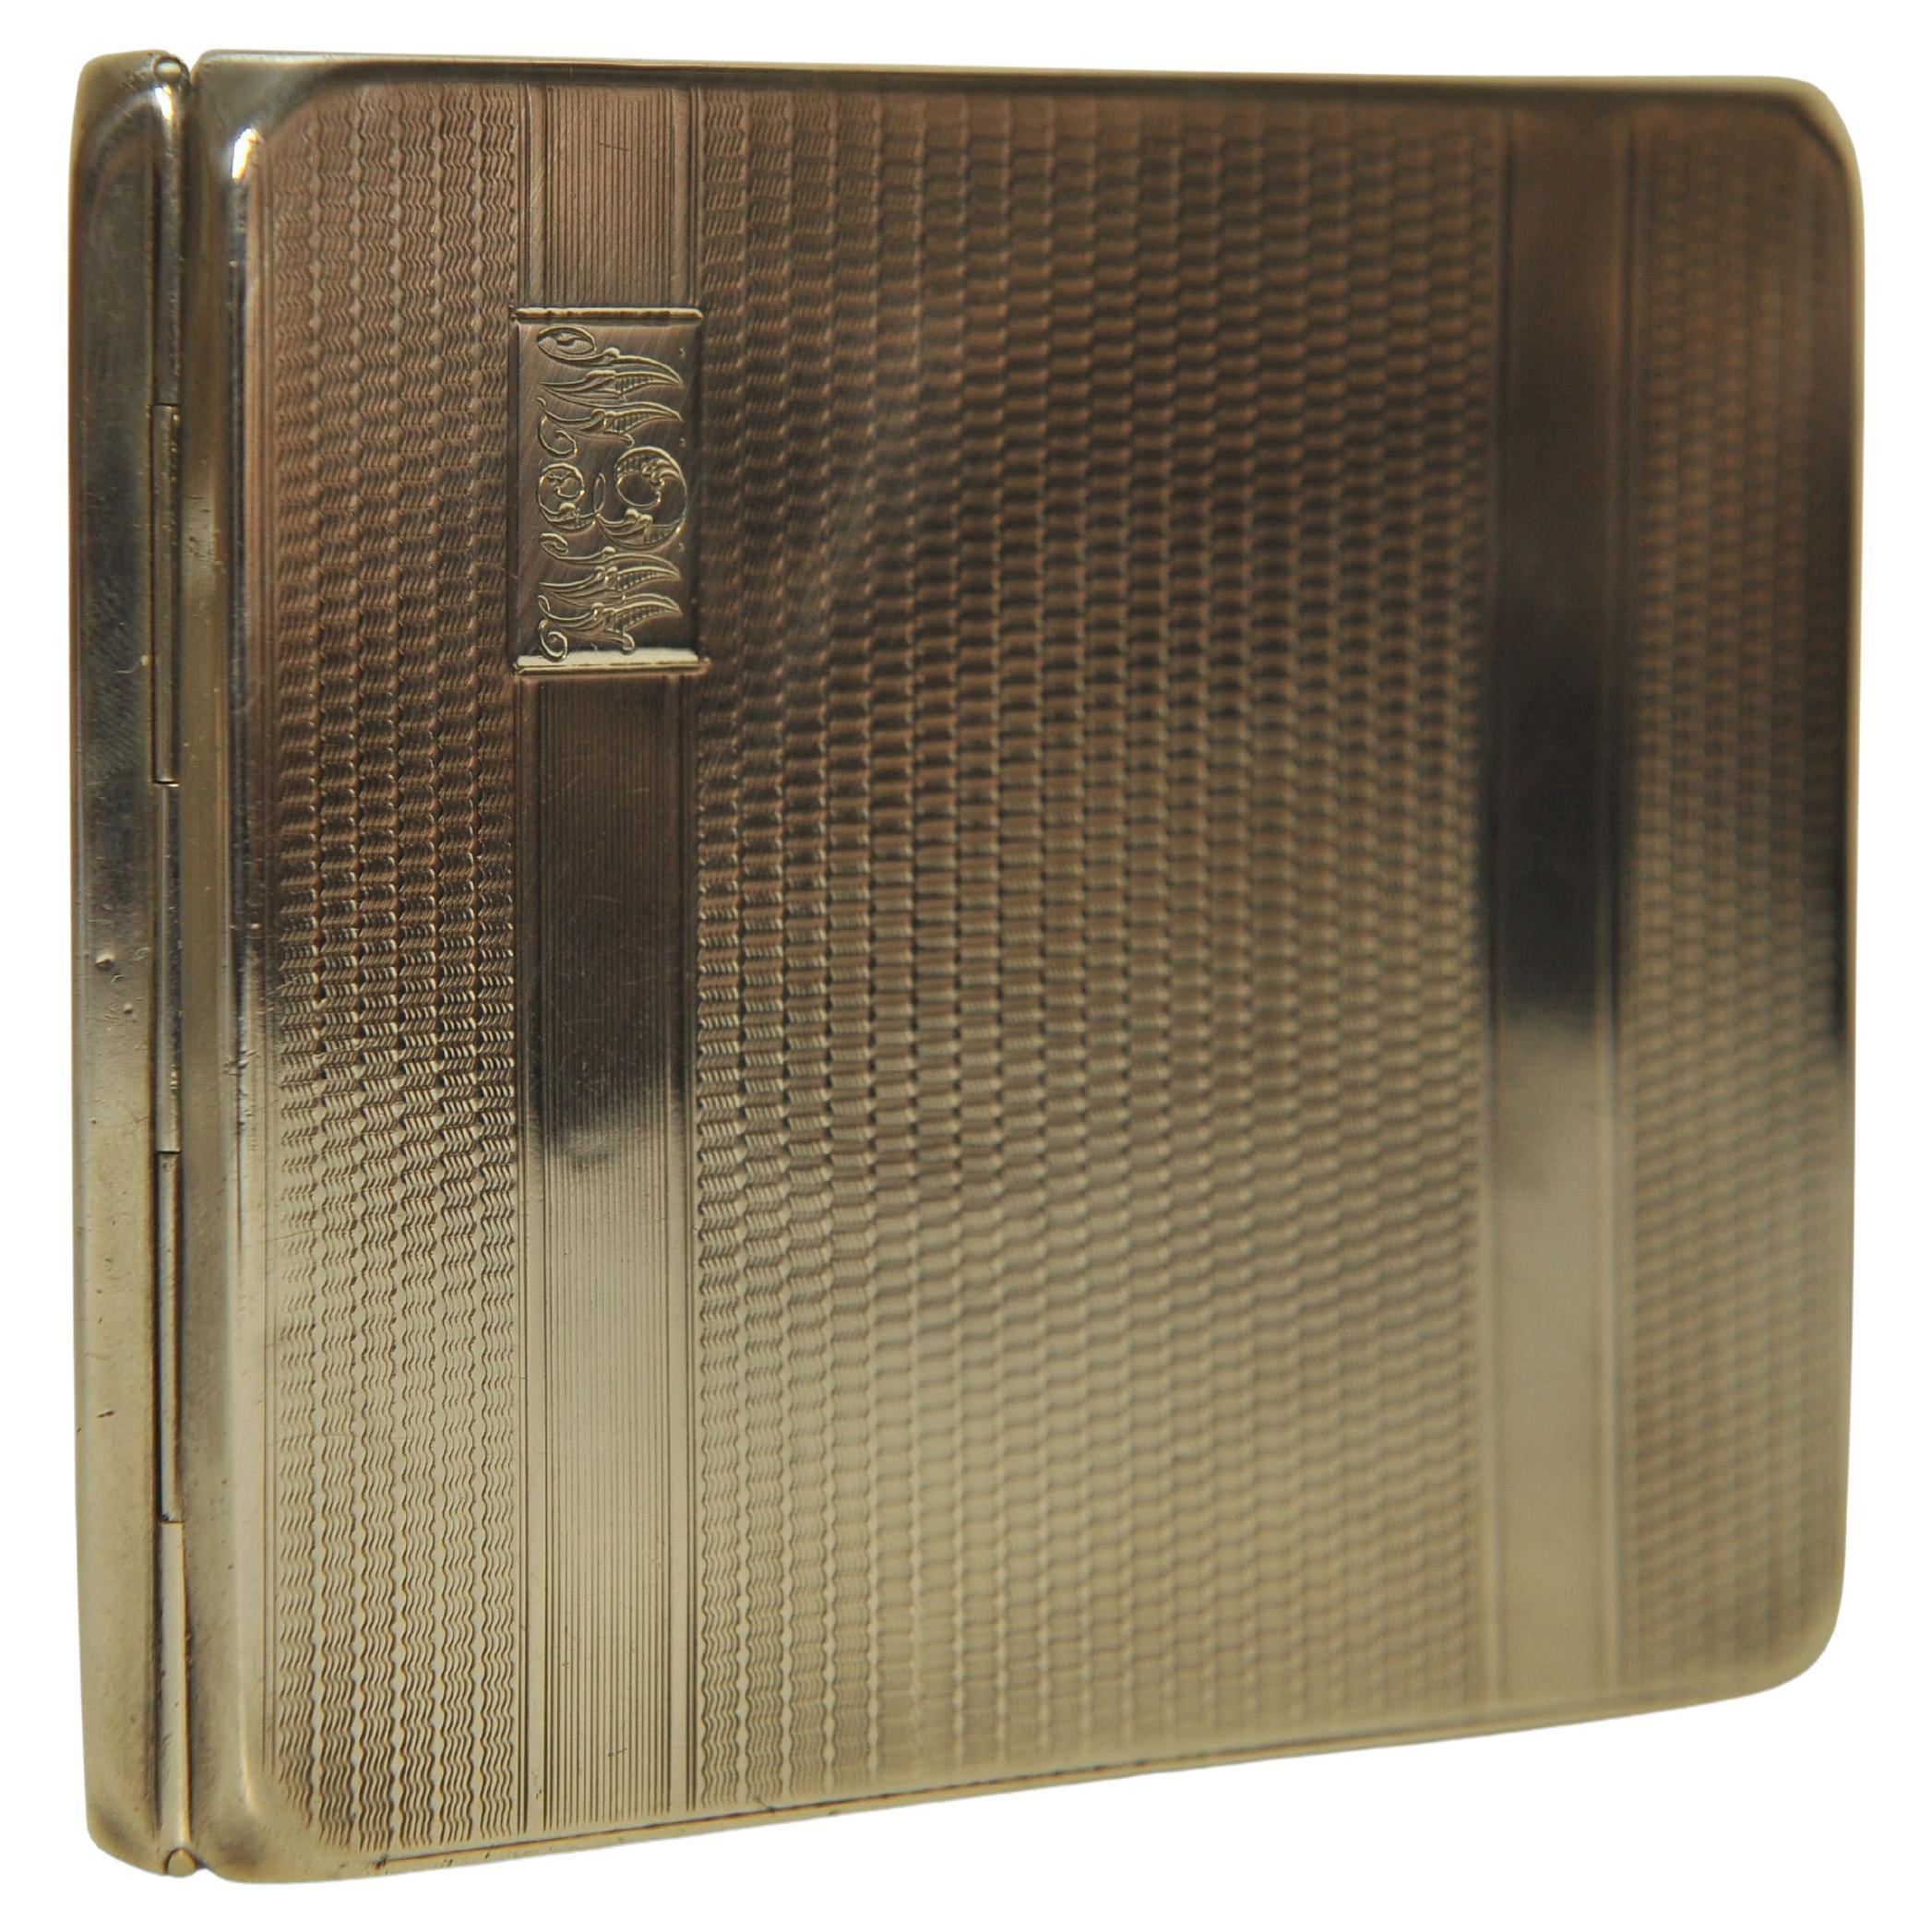 Elegant Art Deco Sterling Silver Engraved Cigarette Case By Renowned British SilverSmiths Harman Bros. Birmingham 1931. Weight 129grams

Hallmarked H BROS Birmingham Hallmark G
Ideal Christmas Present

